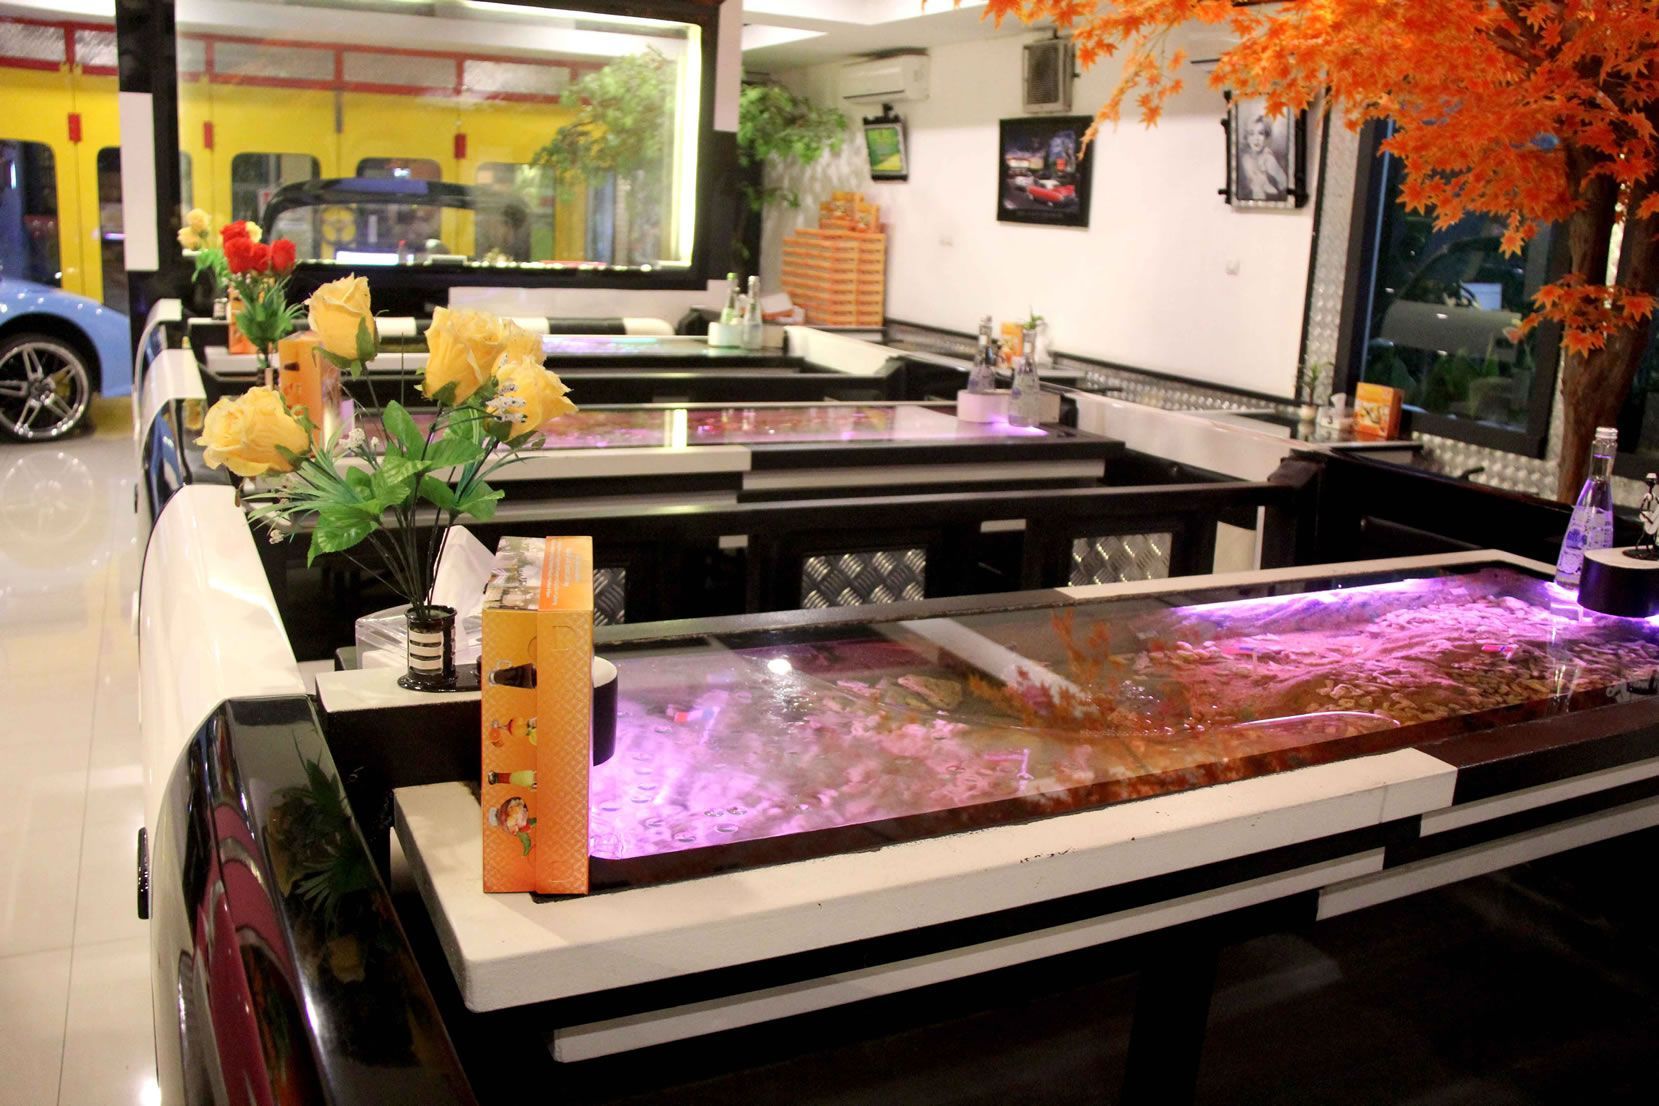 Most aquarium cars in a restaurant: Dream Cars Restaurant 2 sets world record (VIDEO)
